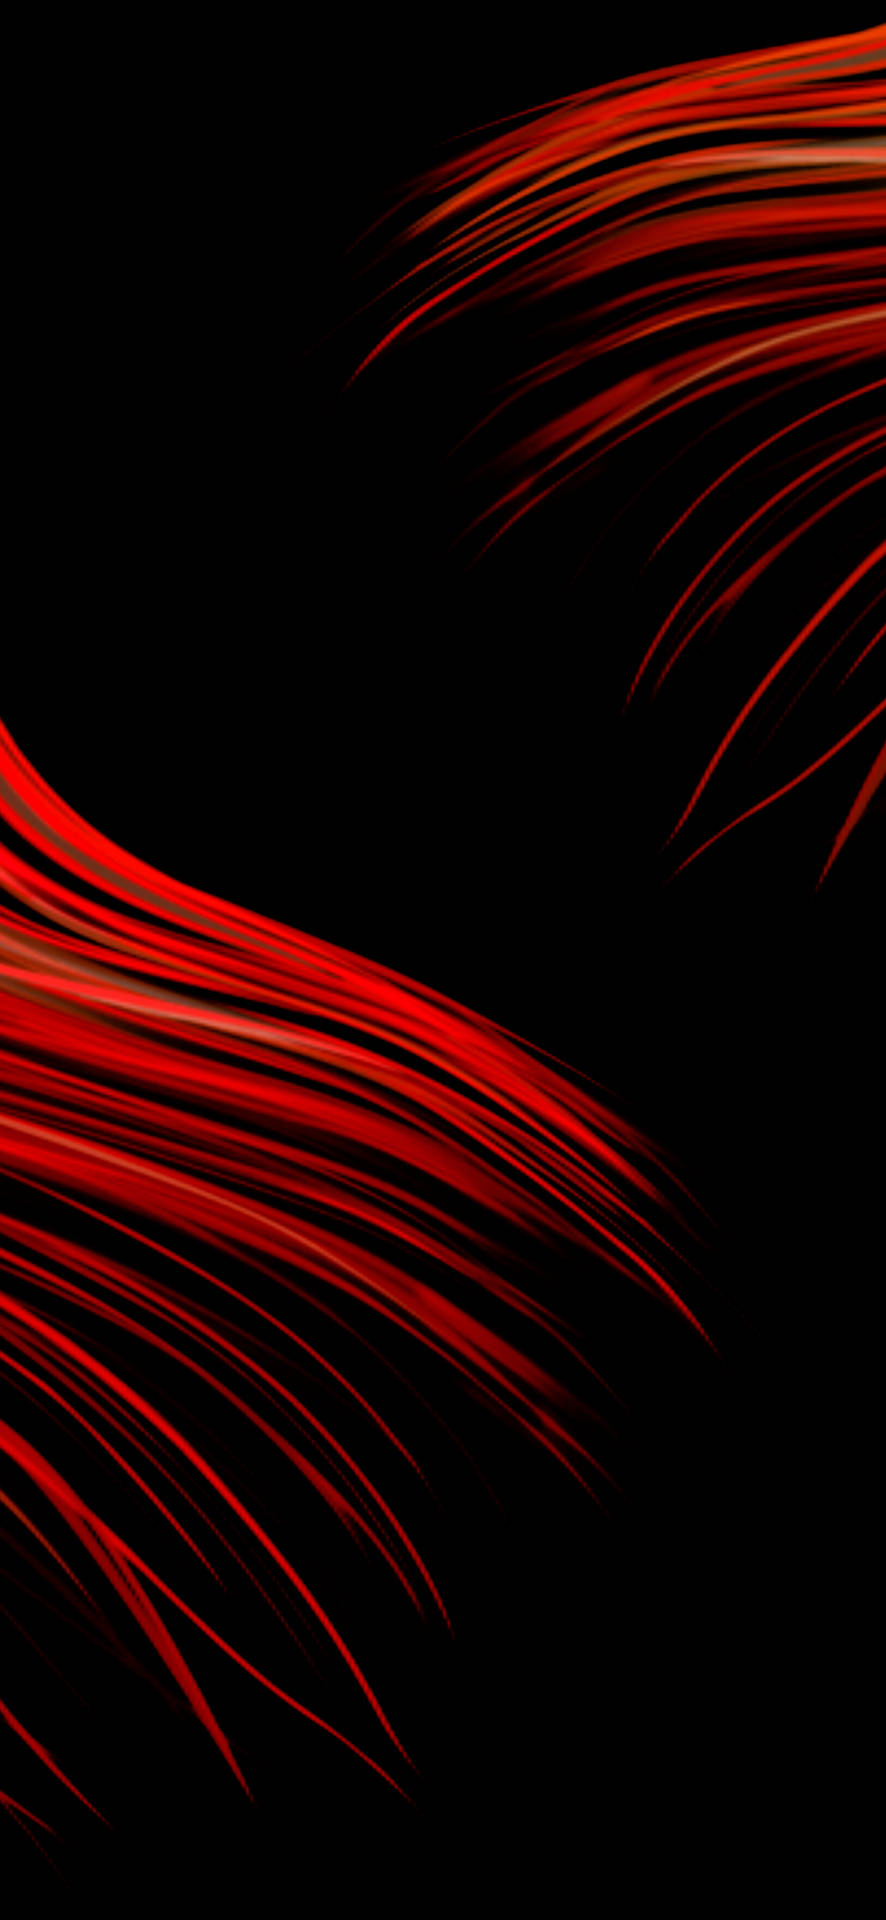 Professional Red And Black Digital Art Wallpaper